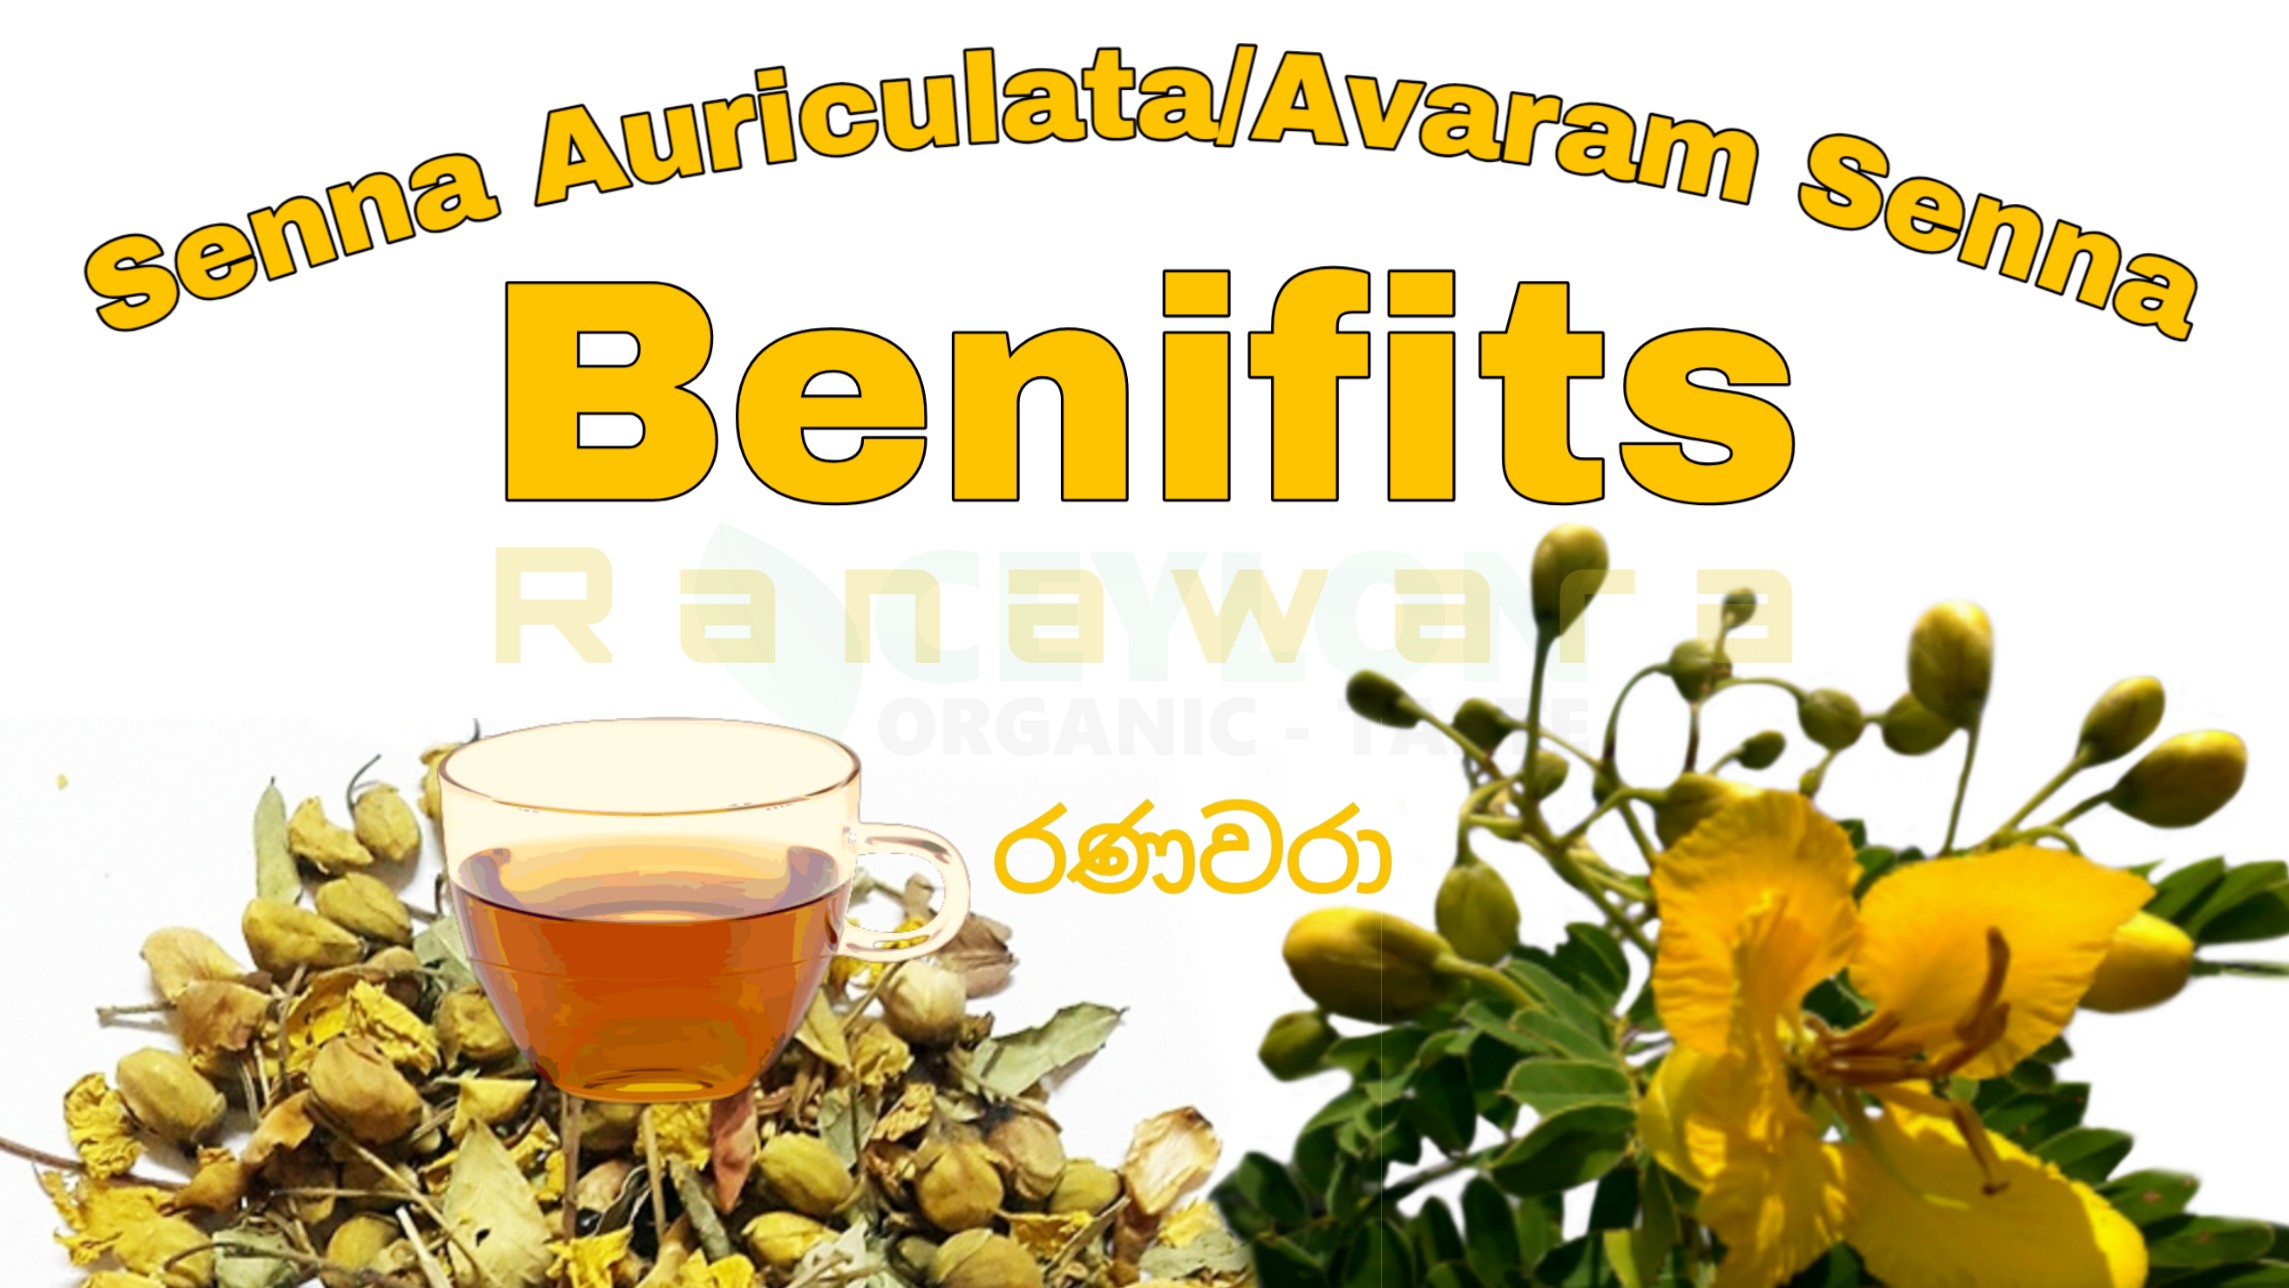 Top 10 Benefits of Senna Auriculata/Avaram Senna/ Ranawara – One of the Best Herbal Drink